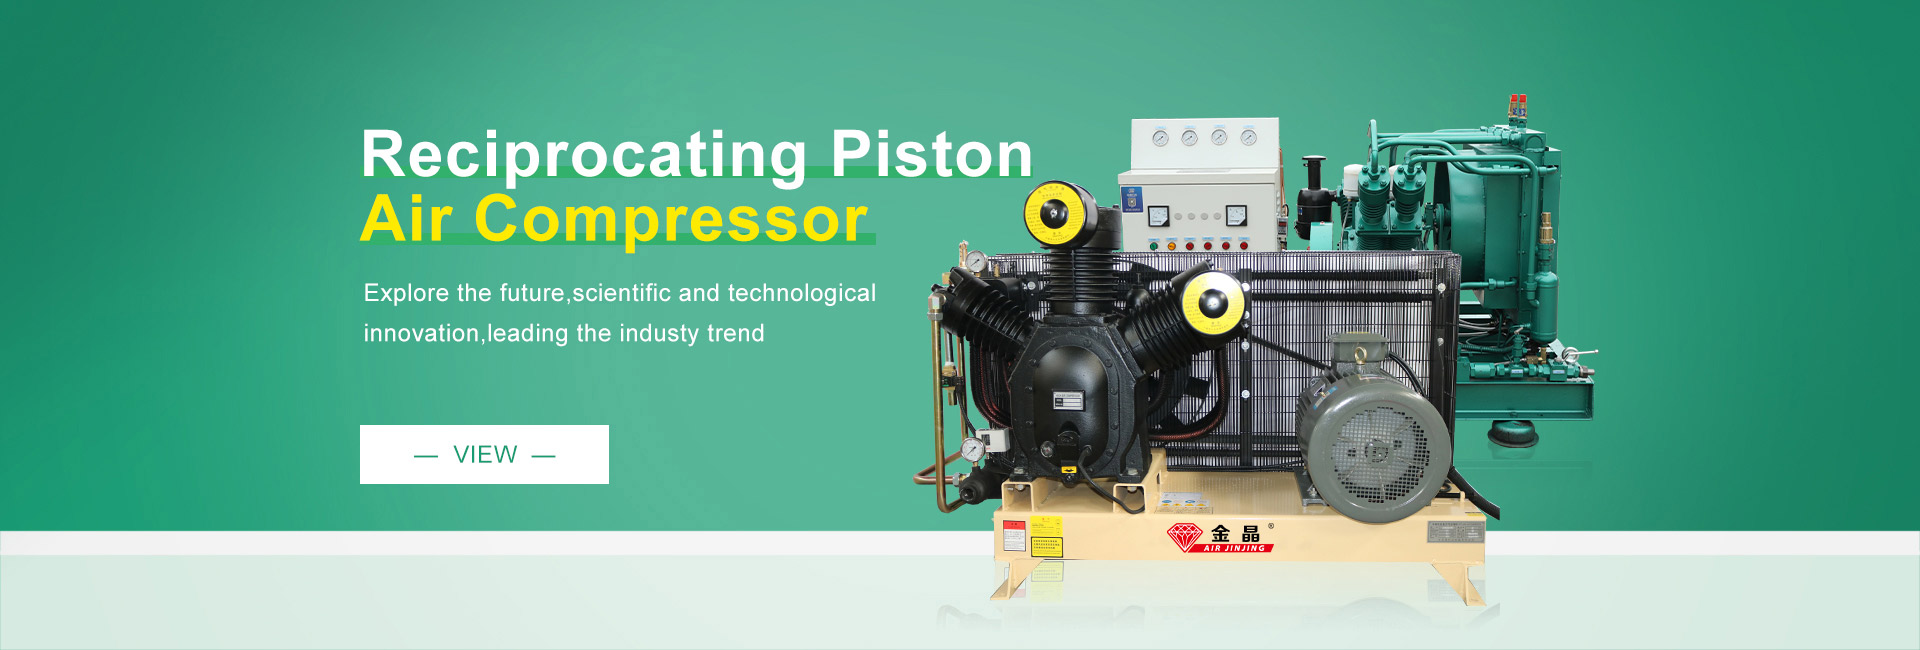 Reciprocating Piston Air Compressor